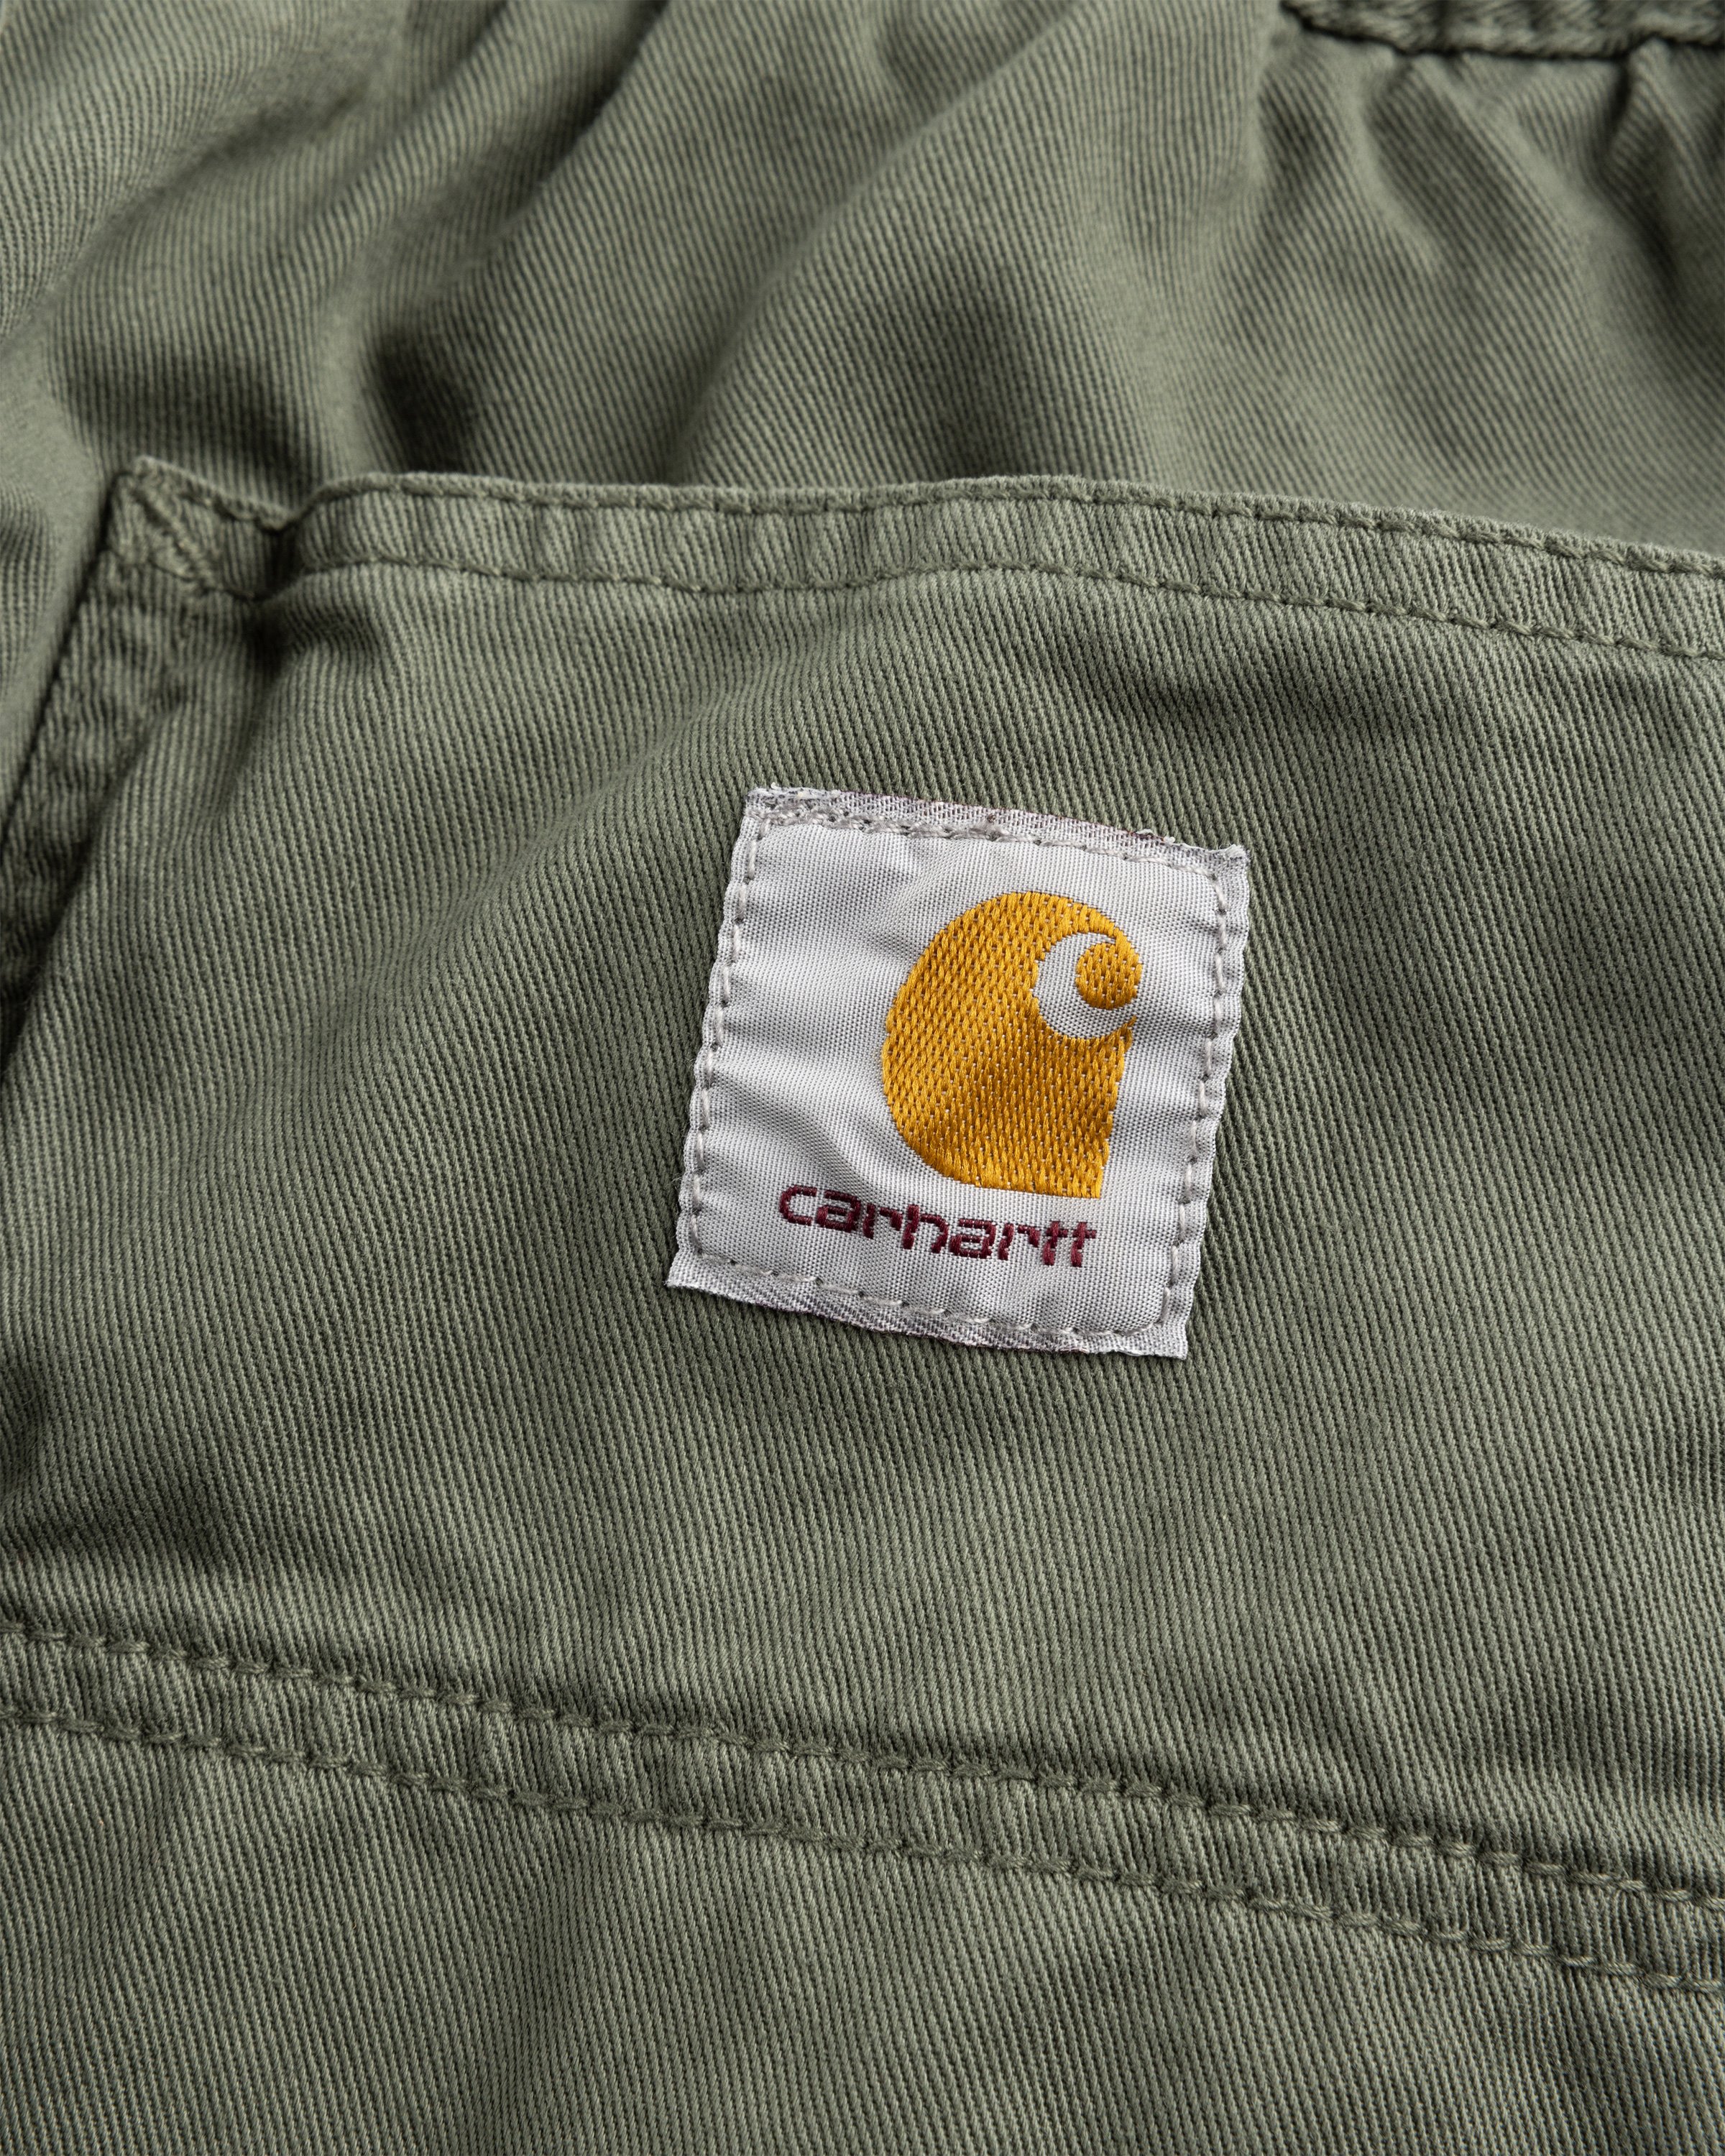 Carhartt WIP - Flint Short Park /garment dyed - Clothing - Green - Image 6